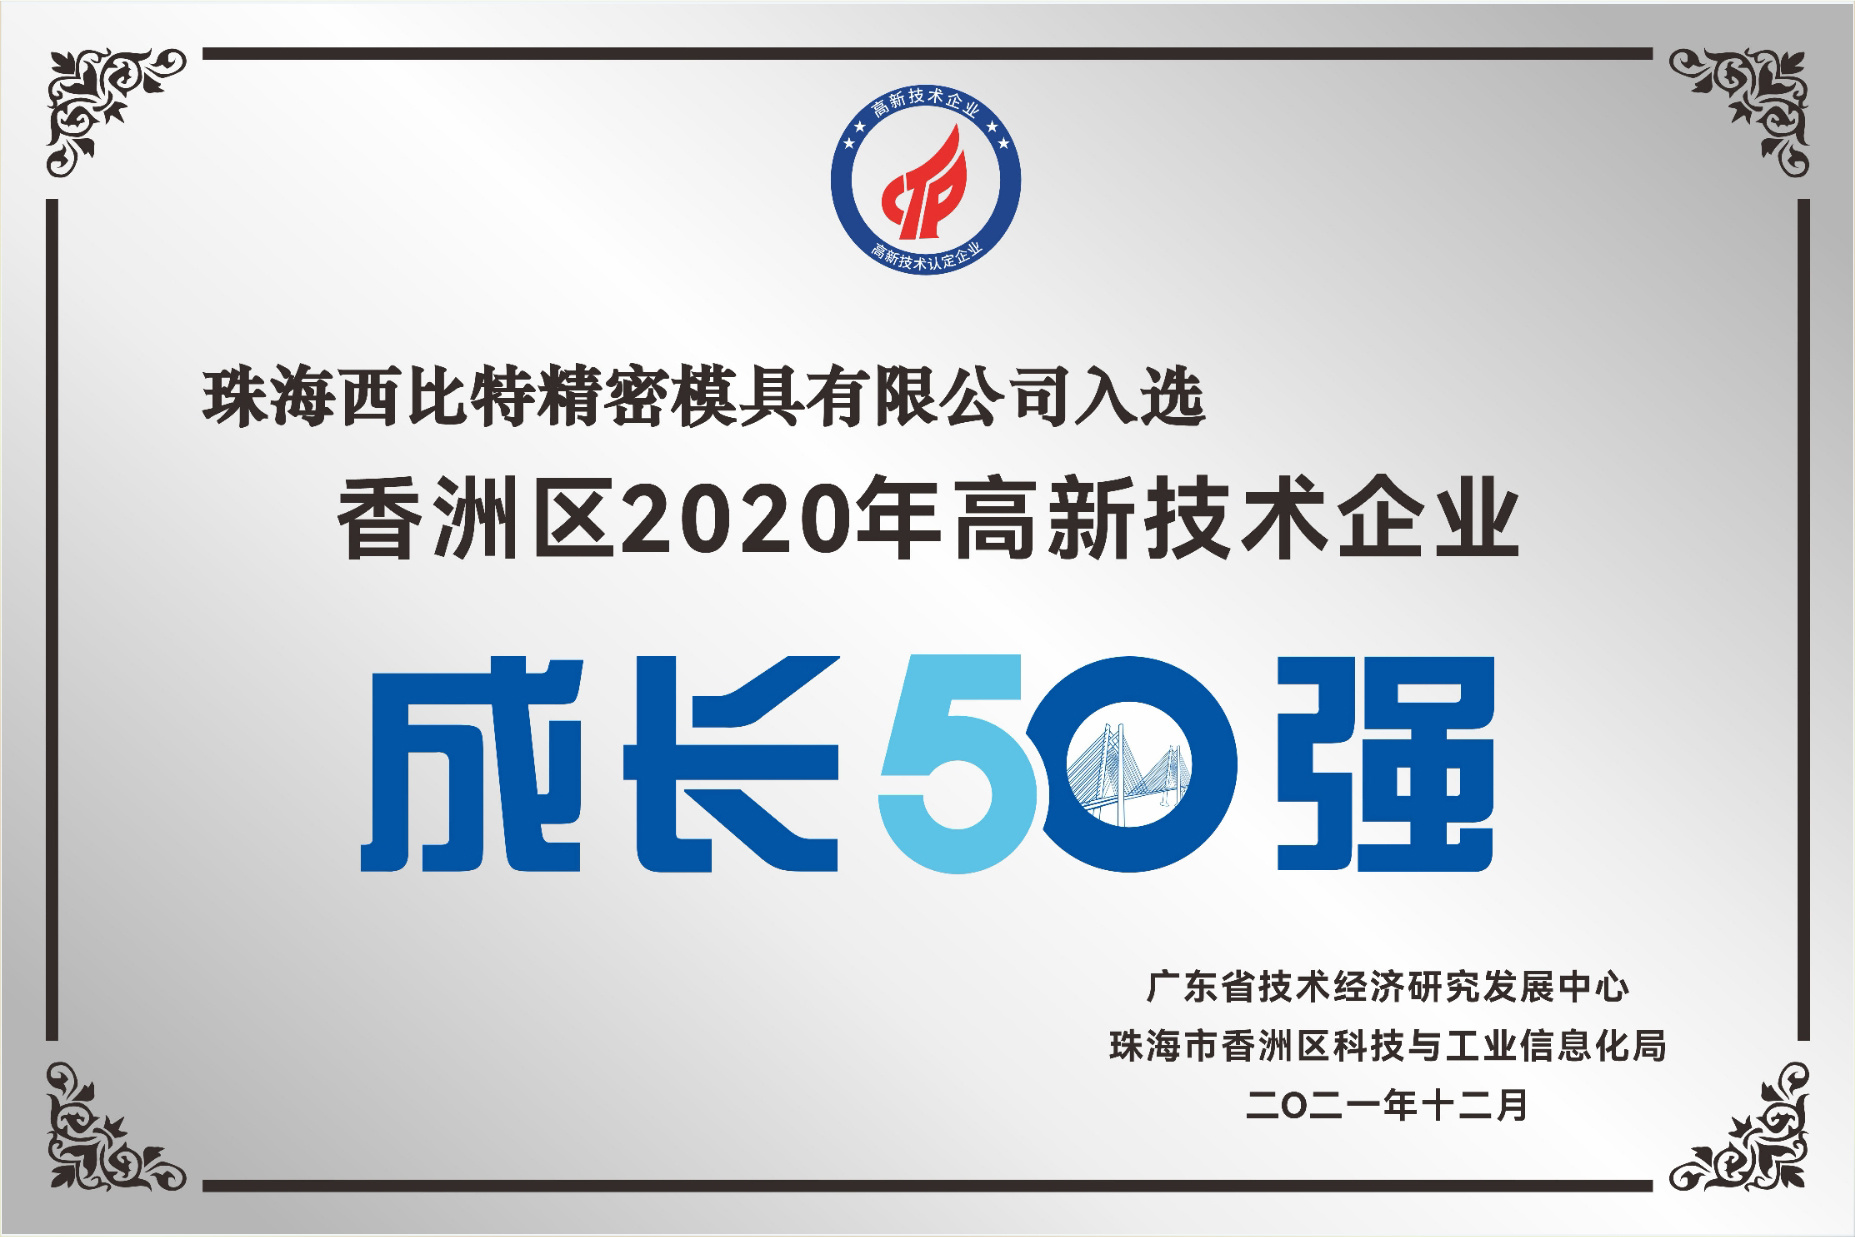 Selected as a High tech Enterprise in Xiangzhou District in 2020